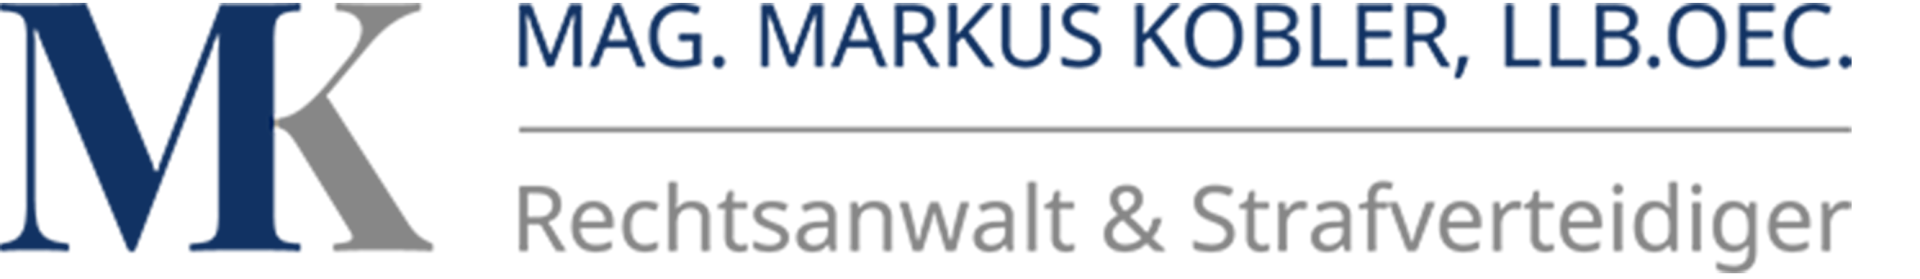 Markus Kobler Logo